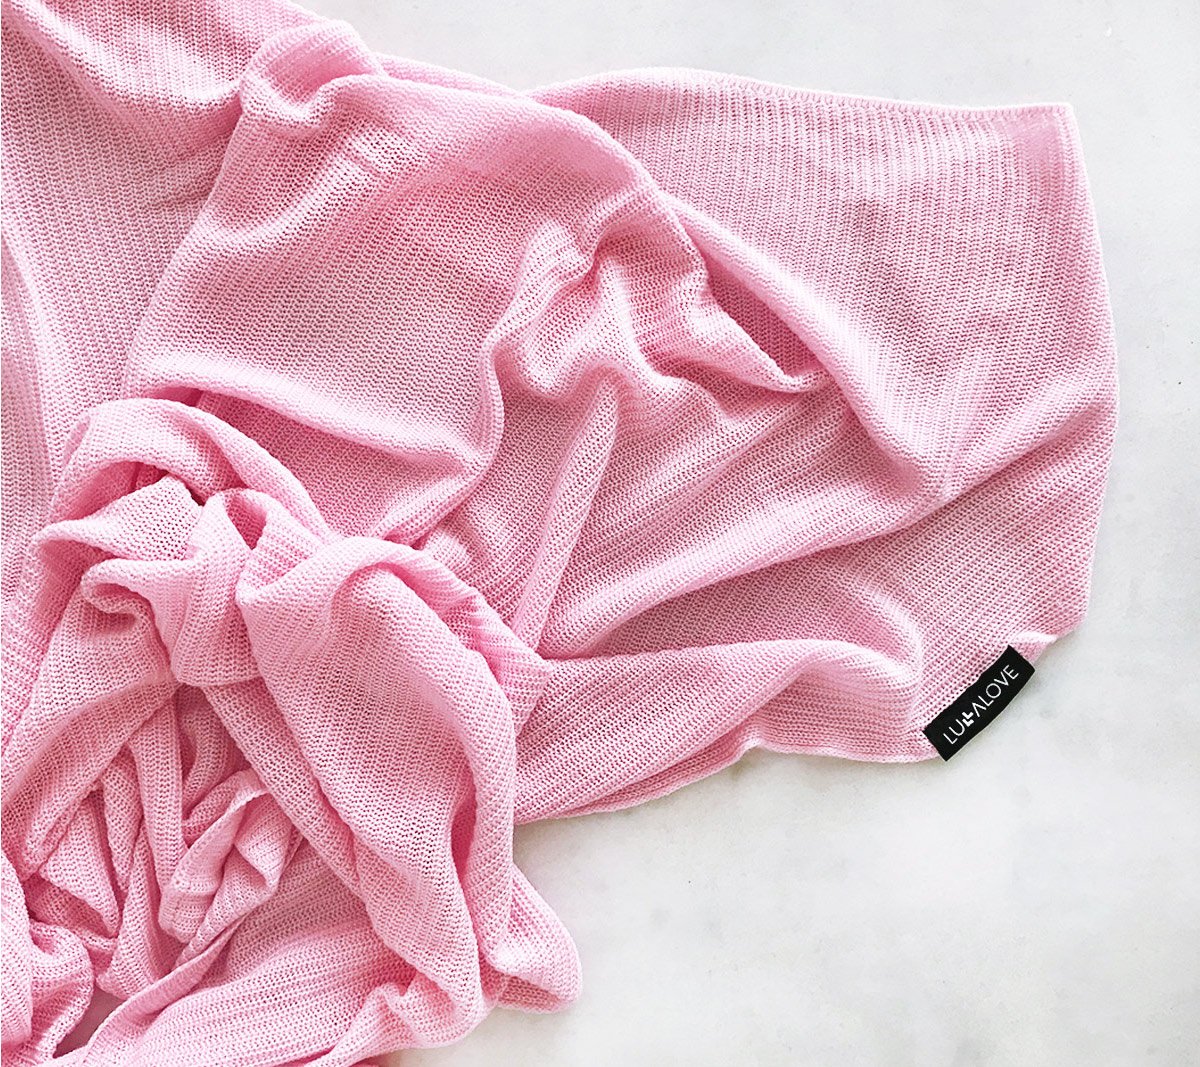 Light knitted bamboo swaddle blanket - Pink Swaddle blanket Lullalove UK 